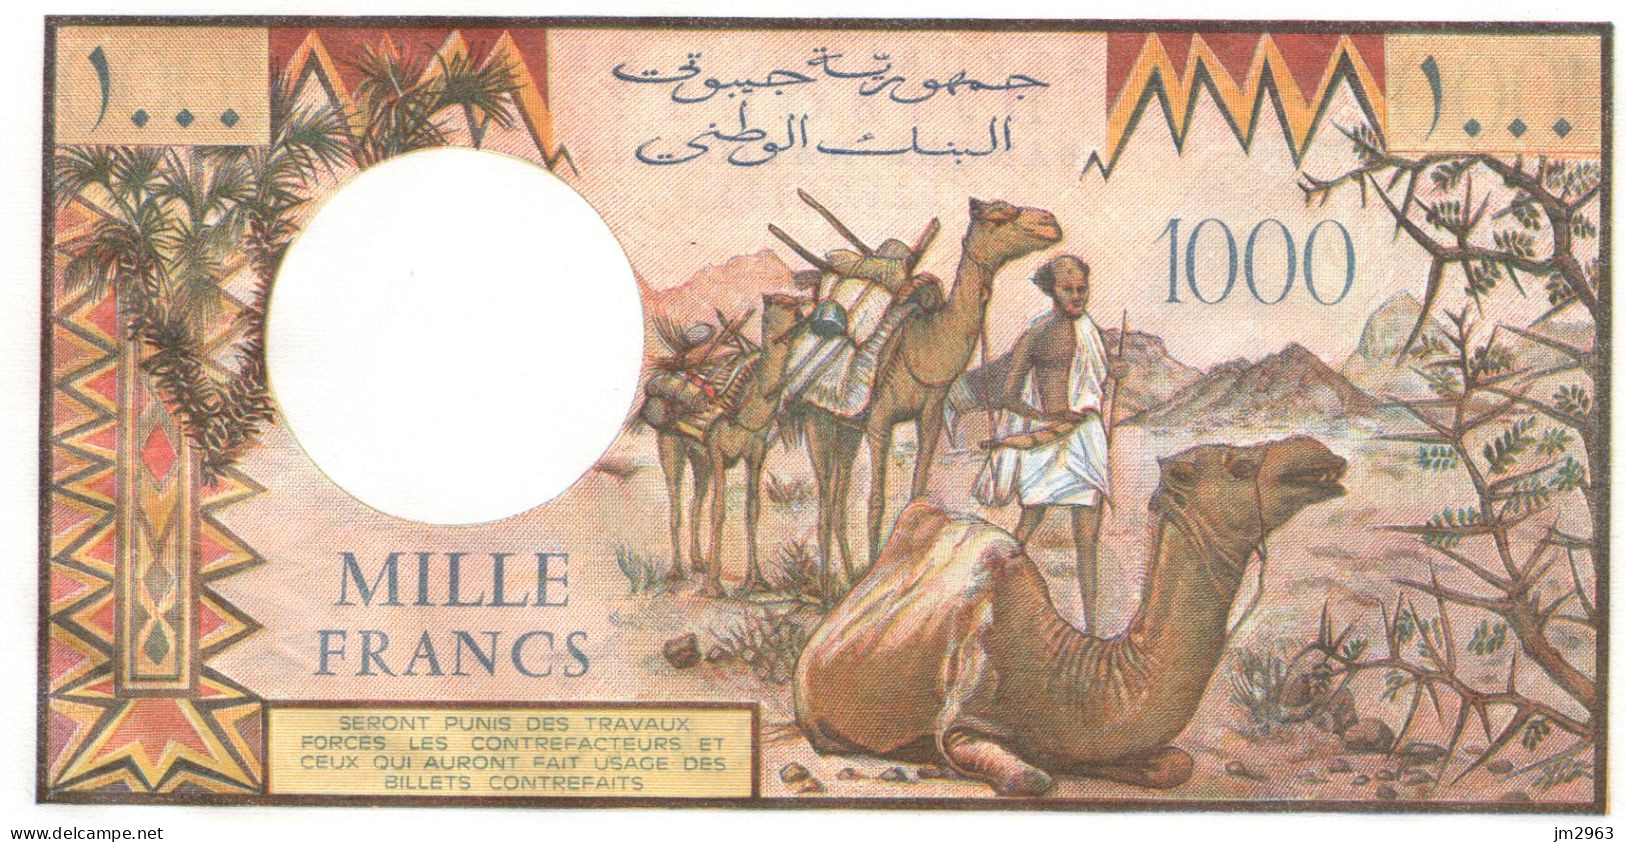 DJIBOUTI ND 1000 Francs UNC E.2 84981 - Dschibuti